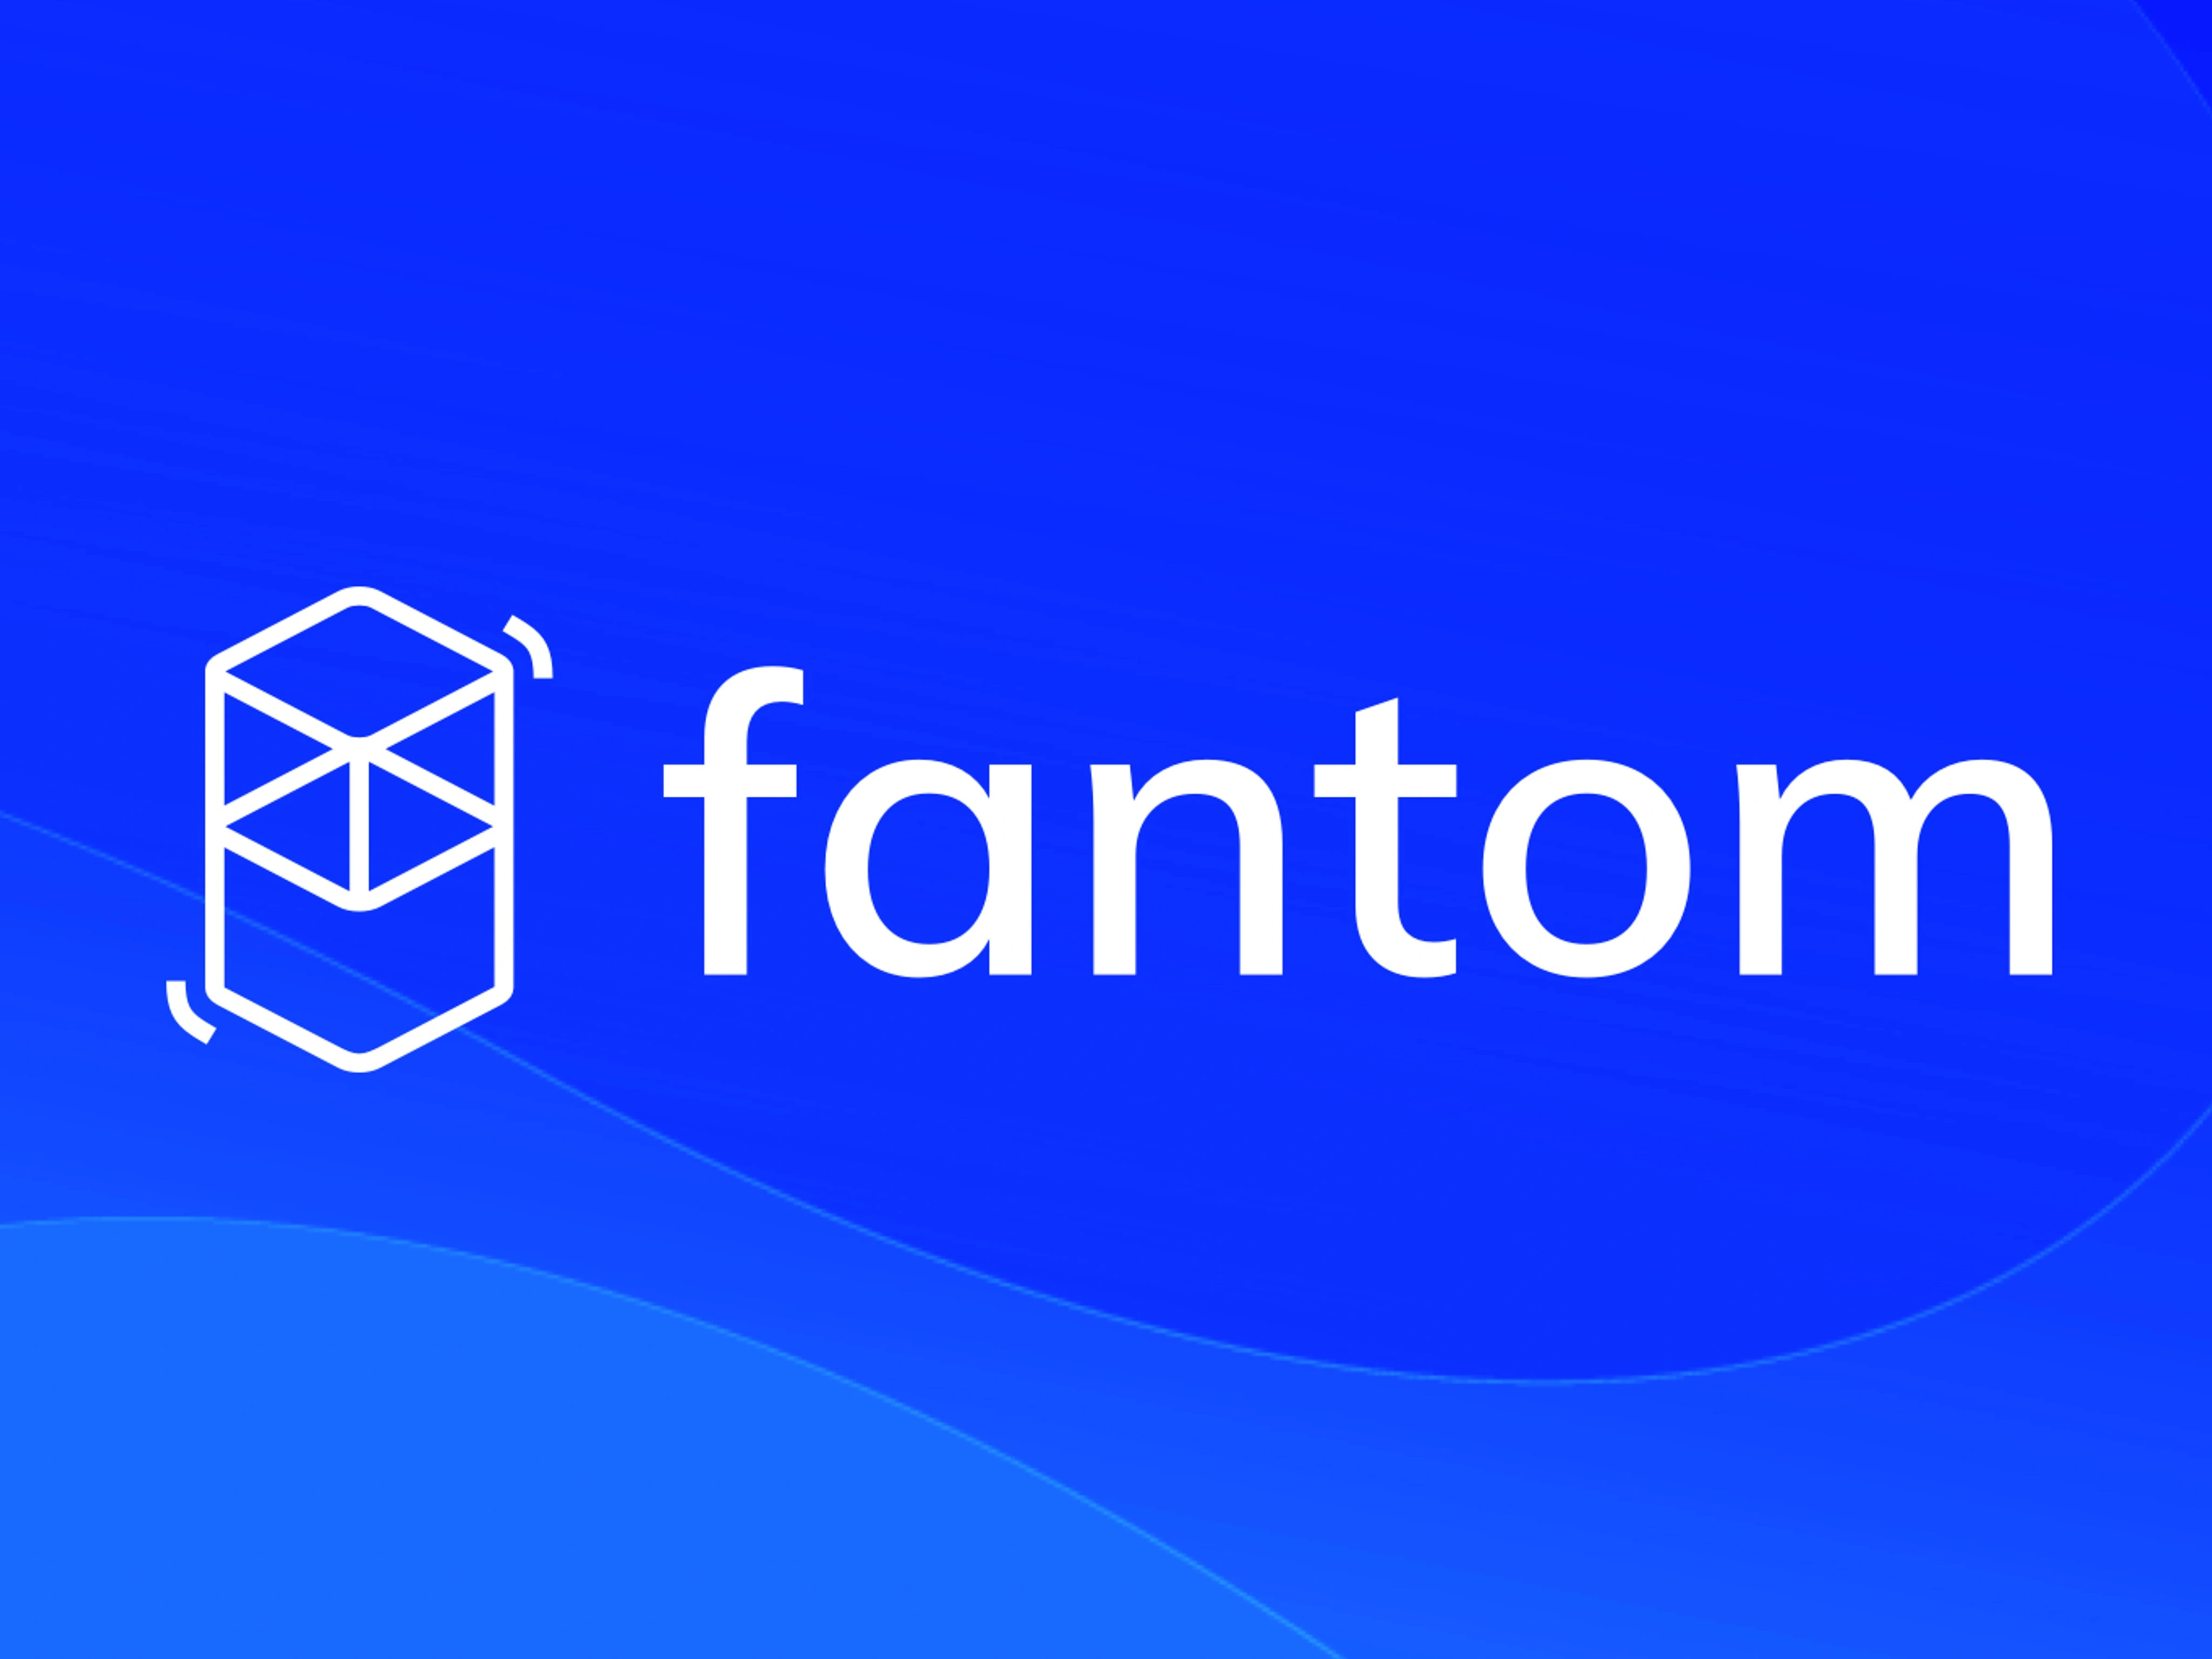 Fantom - Cryptocurrencies | cryptolive.fun